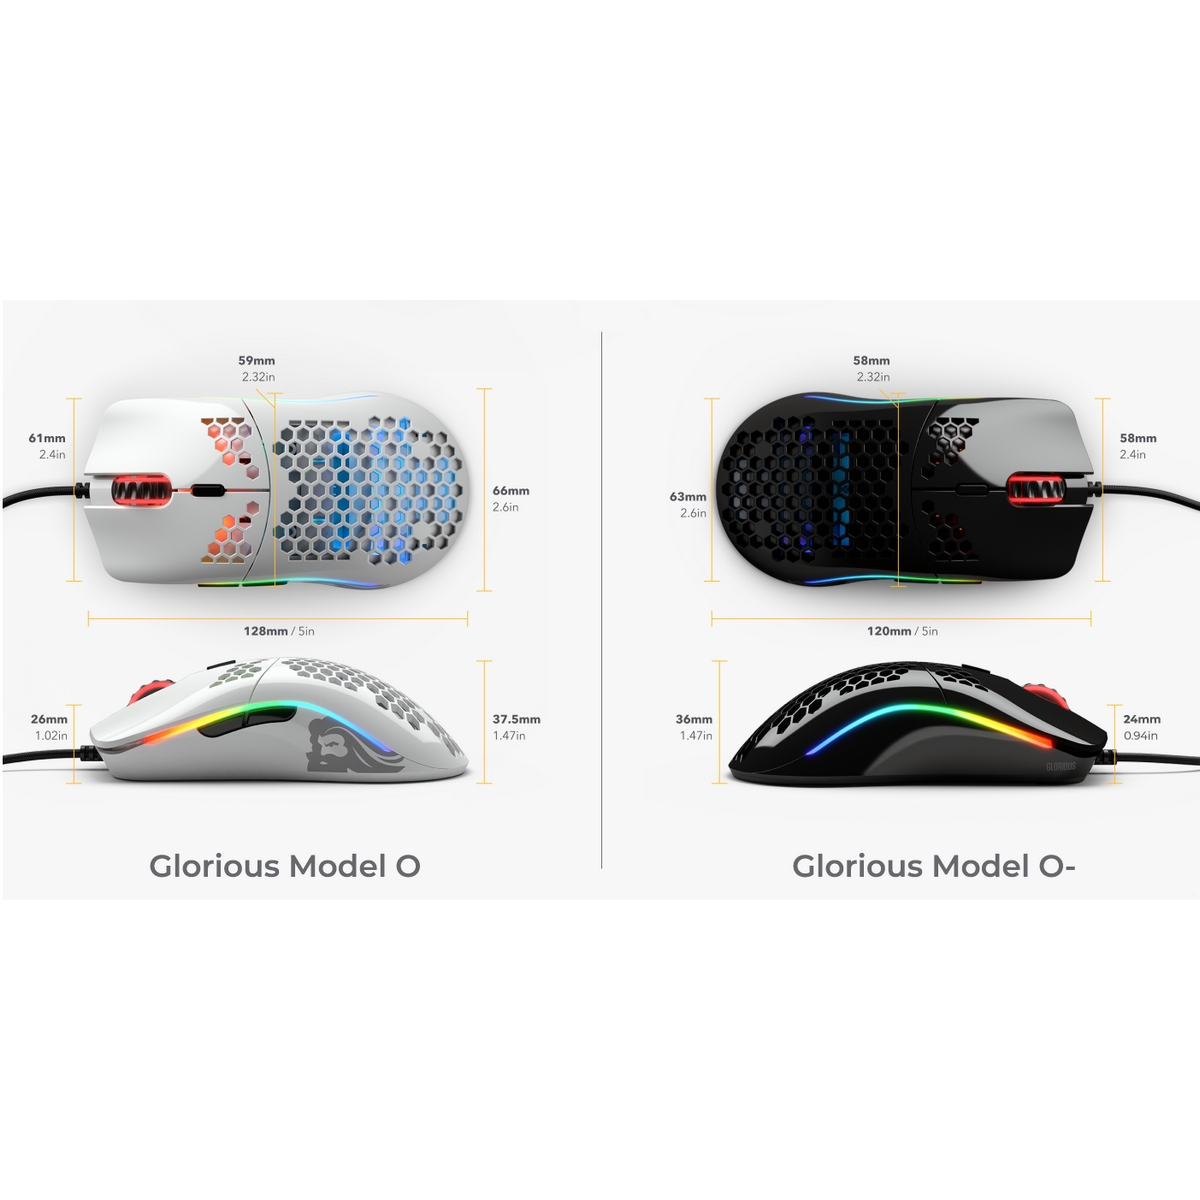 Glorious - Glorious Model O- USB RGB Odin Optical Gaming Mouse - Matte White (GOM-WHITE)